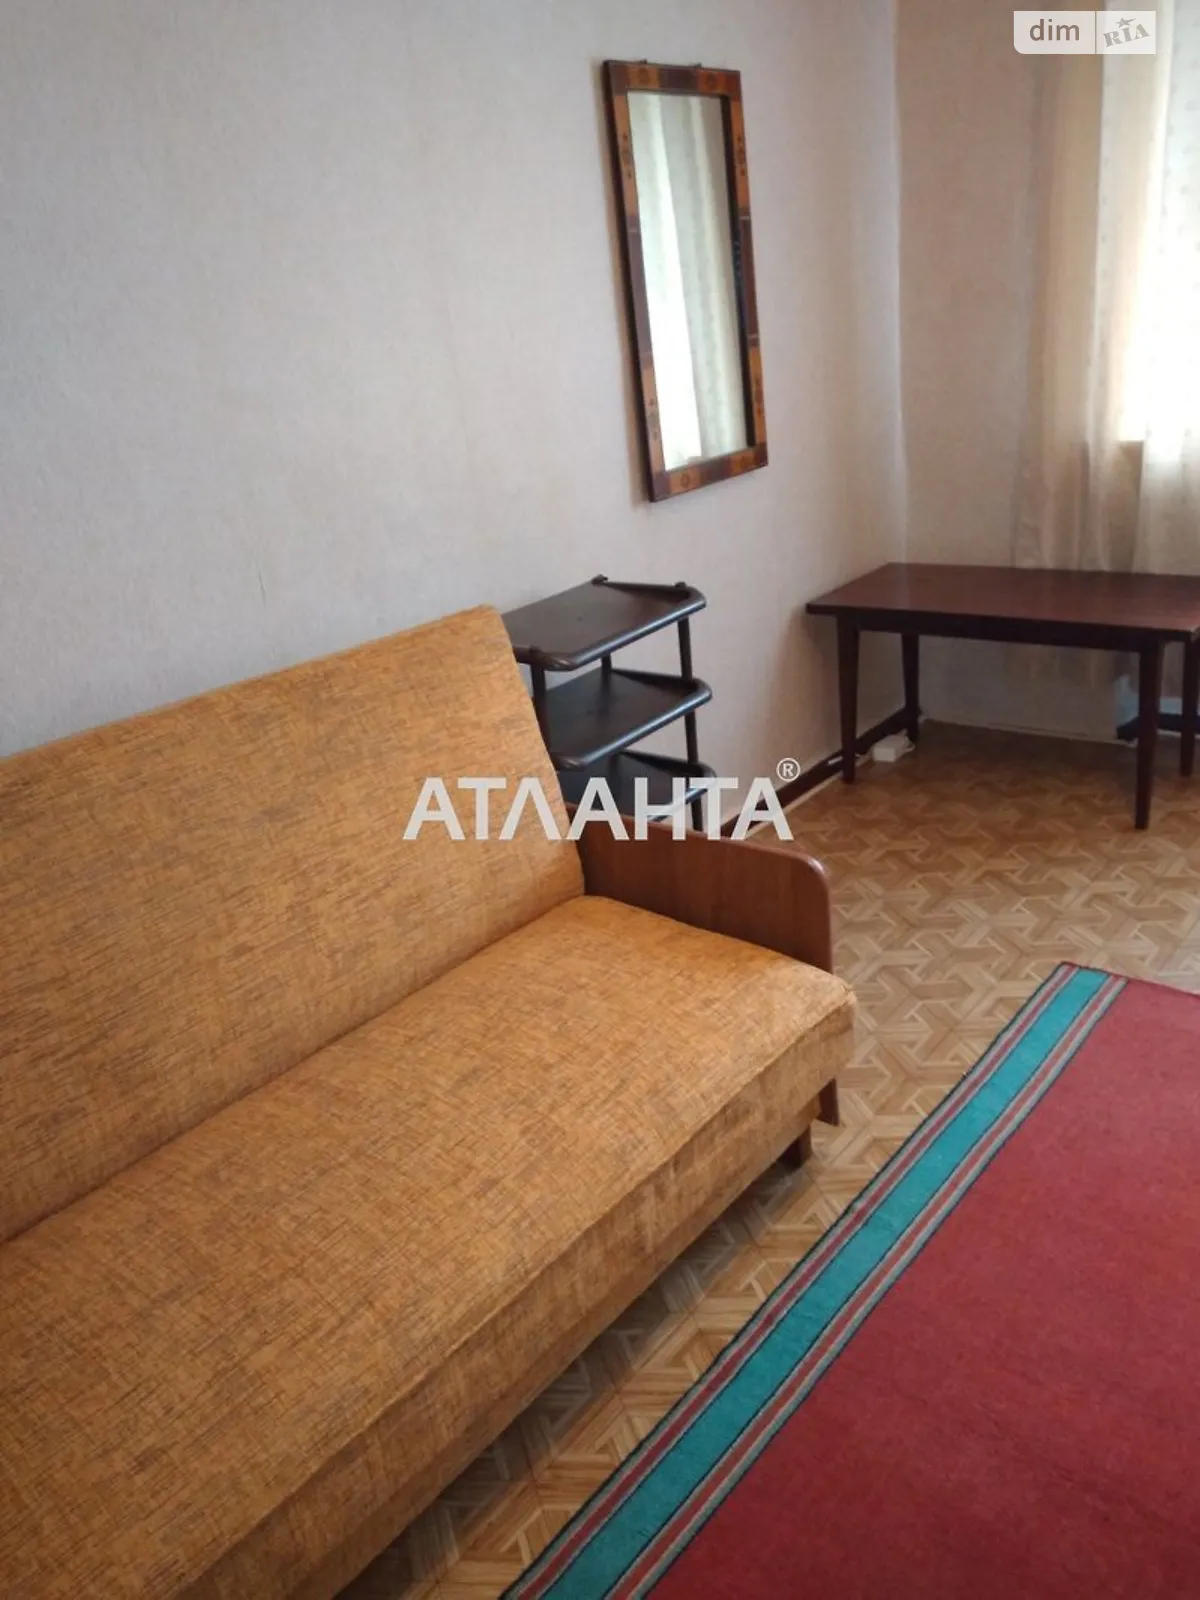 Продается комната 25 кв. м в Одессе, цена: 9999 $ - фото 1